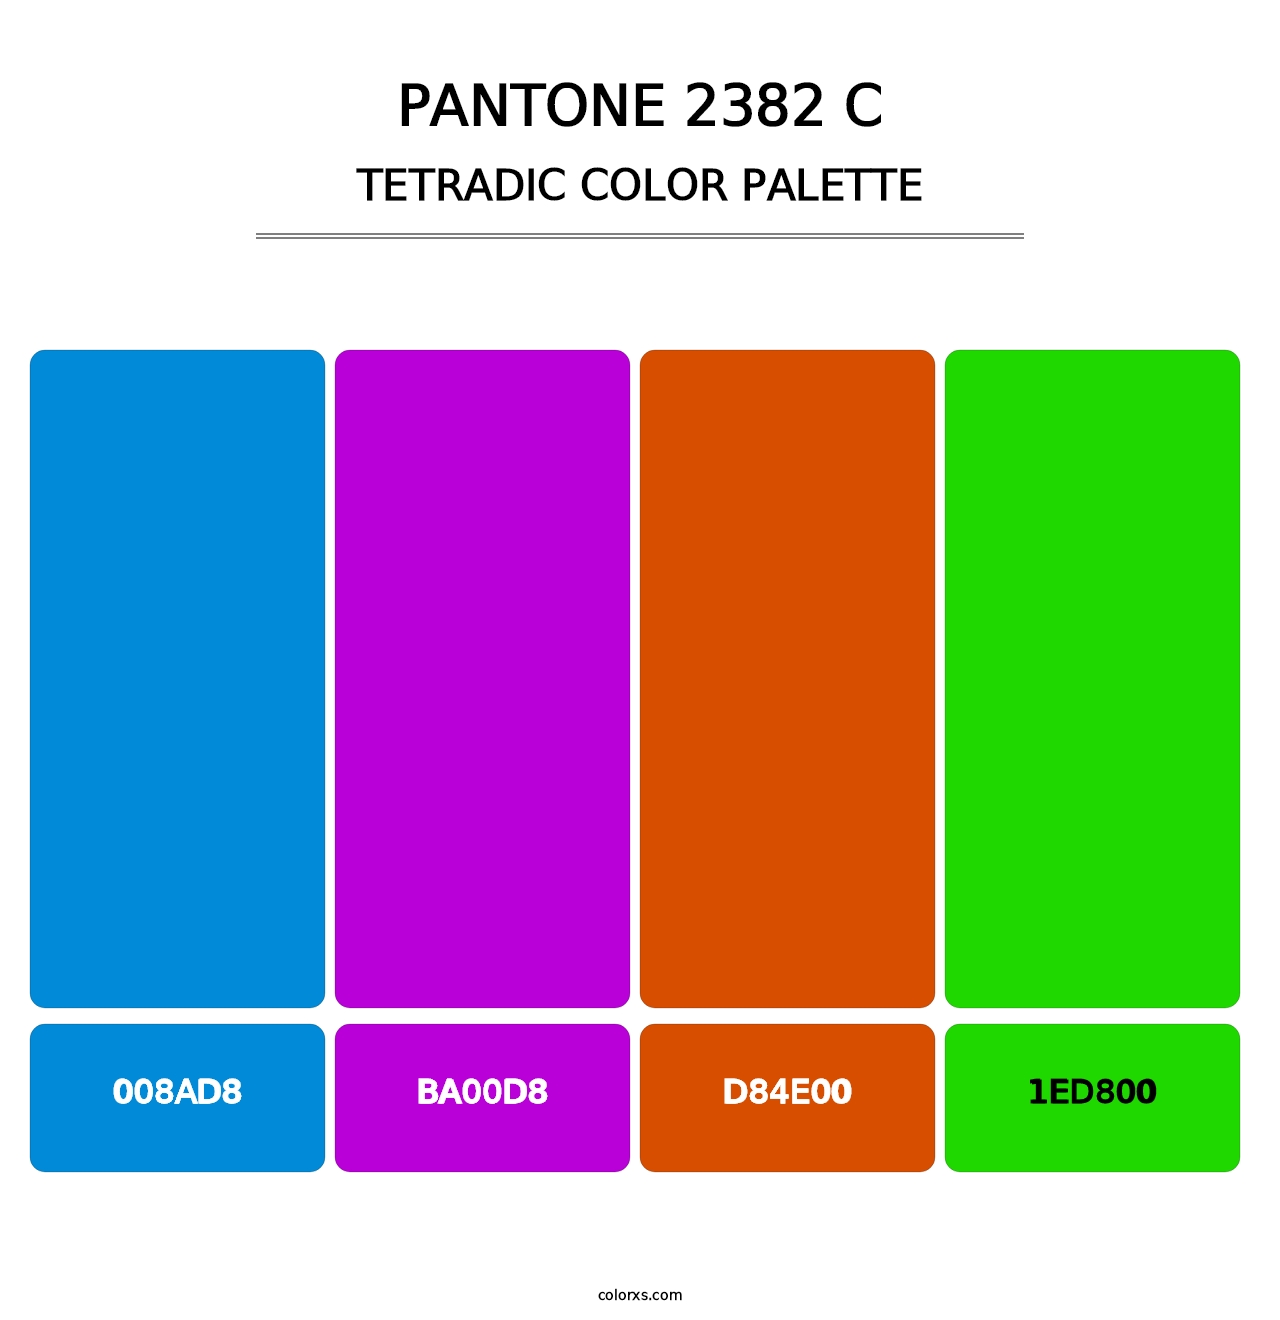 PANTONE 2382 C - Tetradic Color Palette